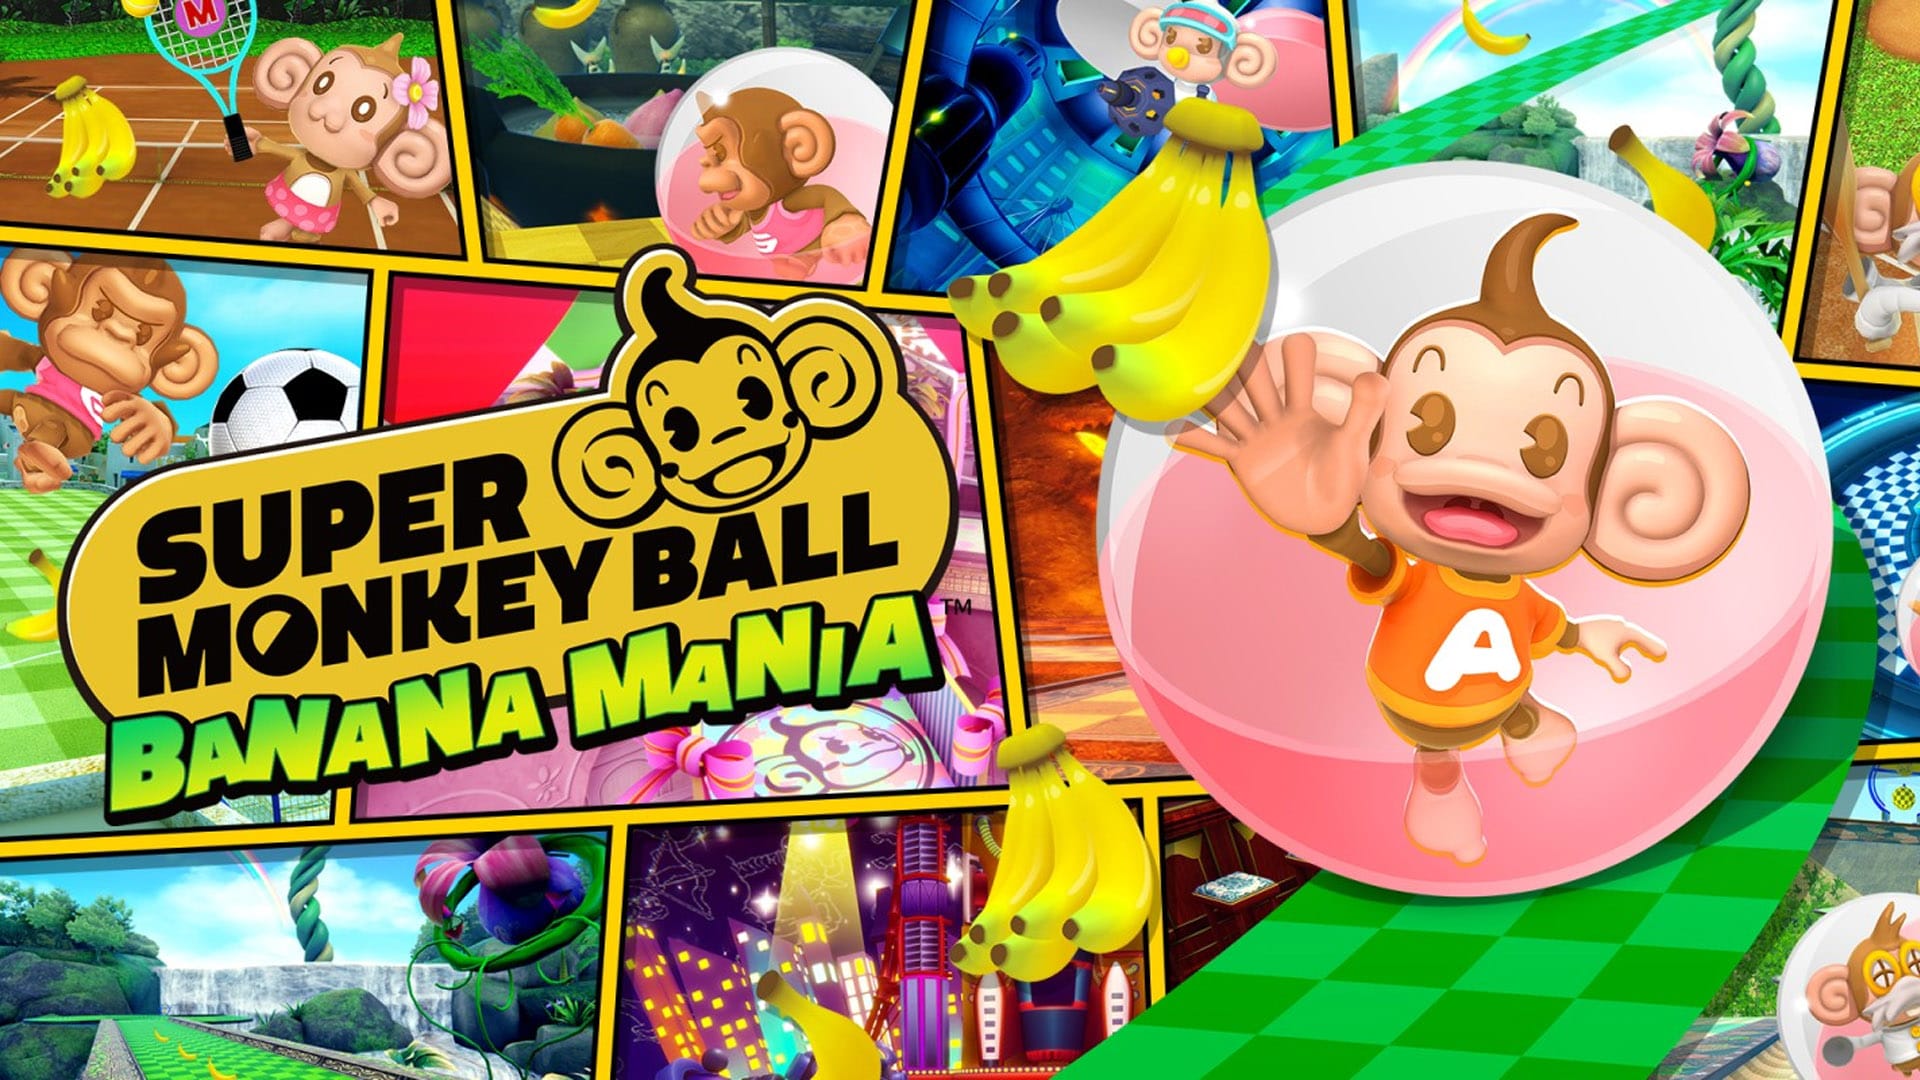 Super monkey ball banana. Super Monkey Ball Banana Mania. Super Monkey Ball обложка. Super Monkey Ball Banana character. Супер обезьяна мяч банановая какашка.